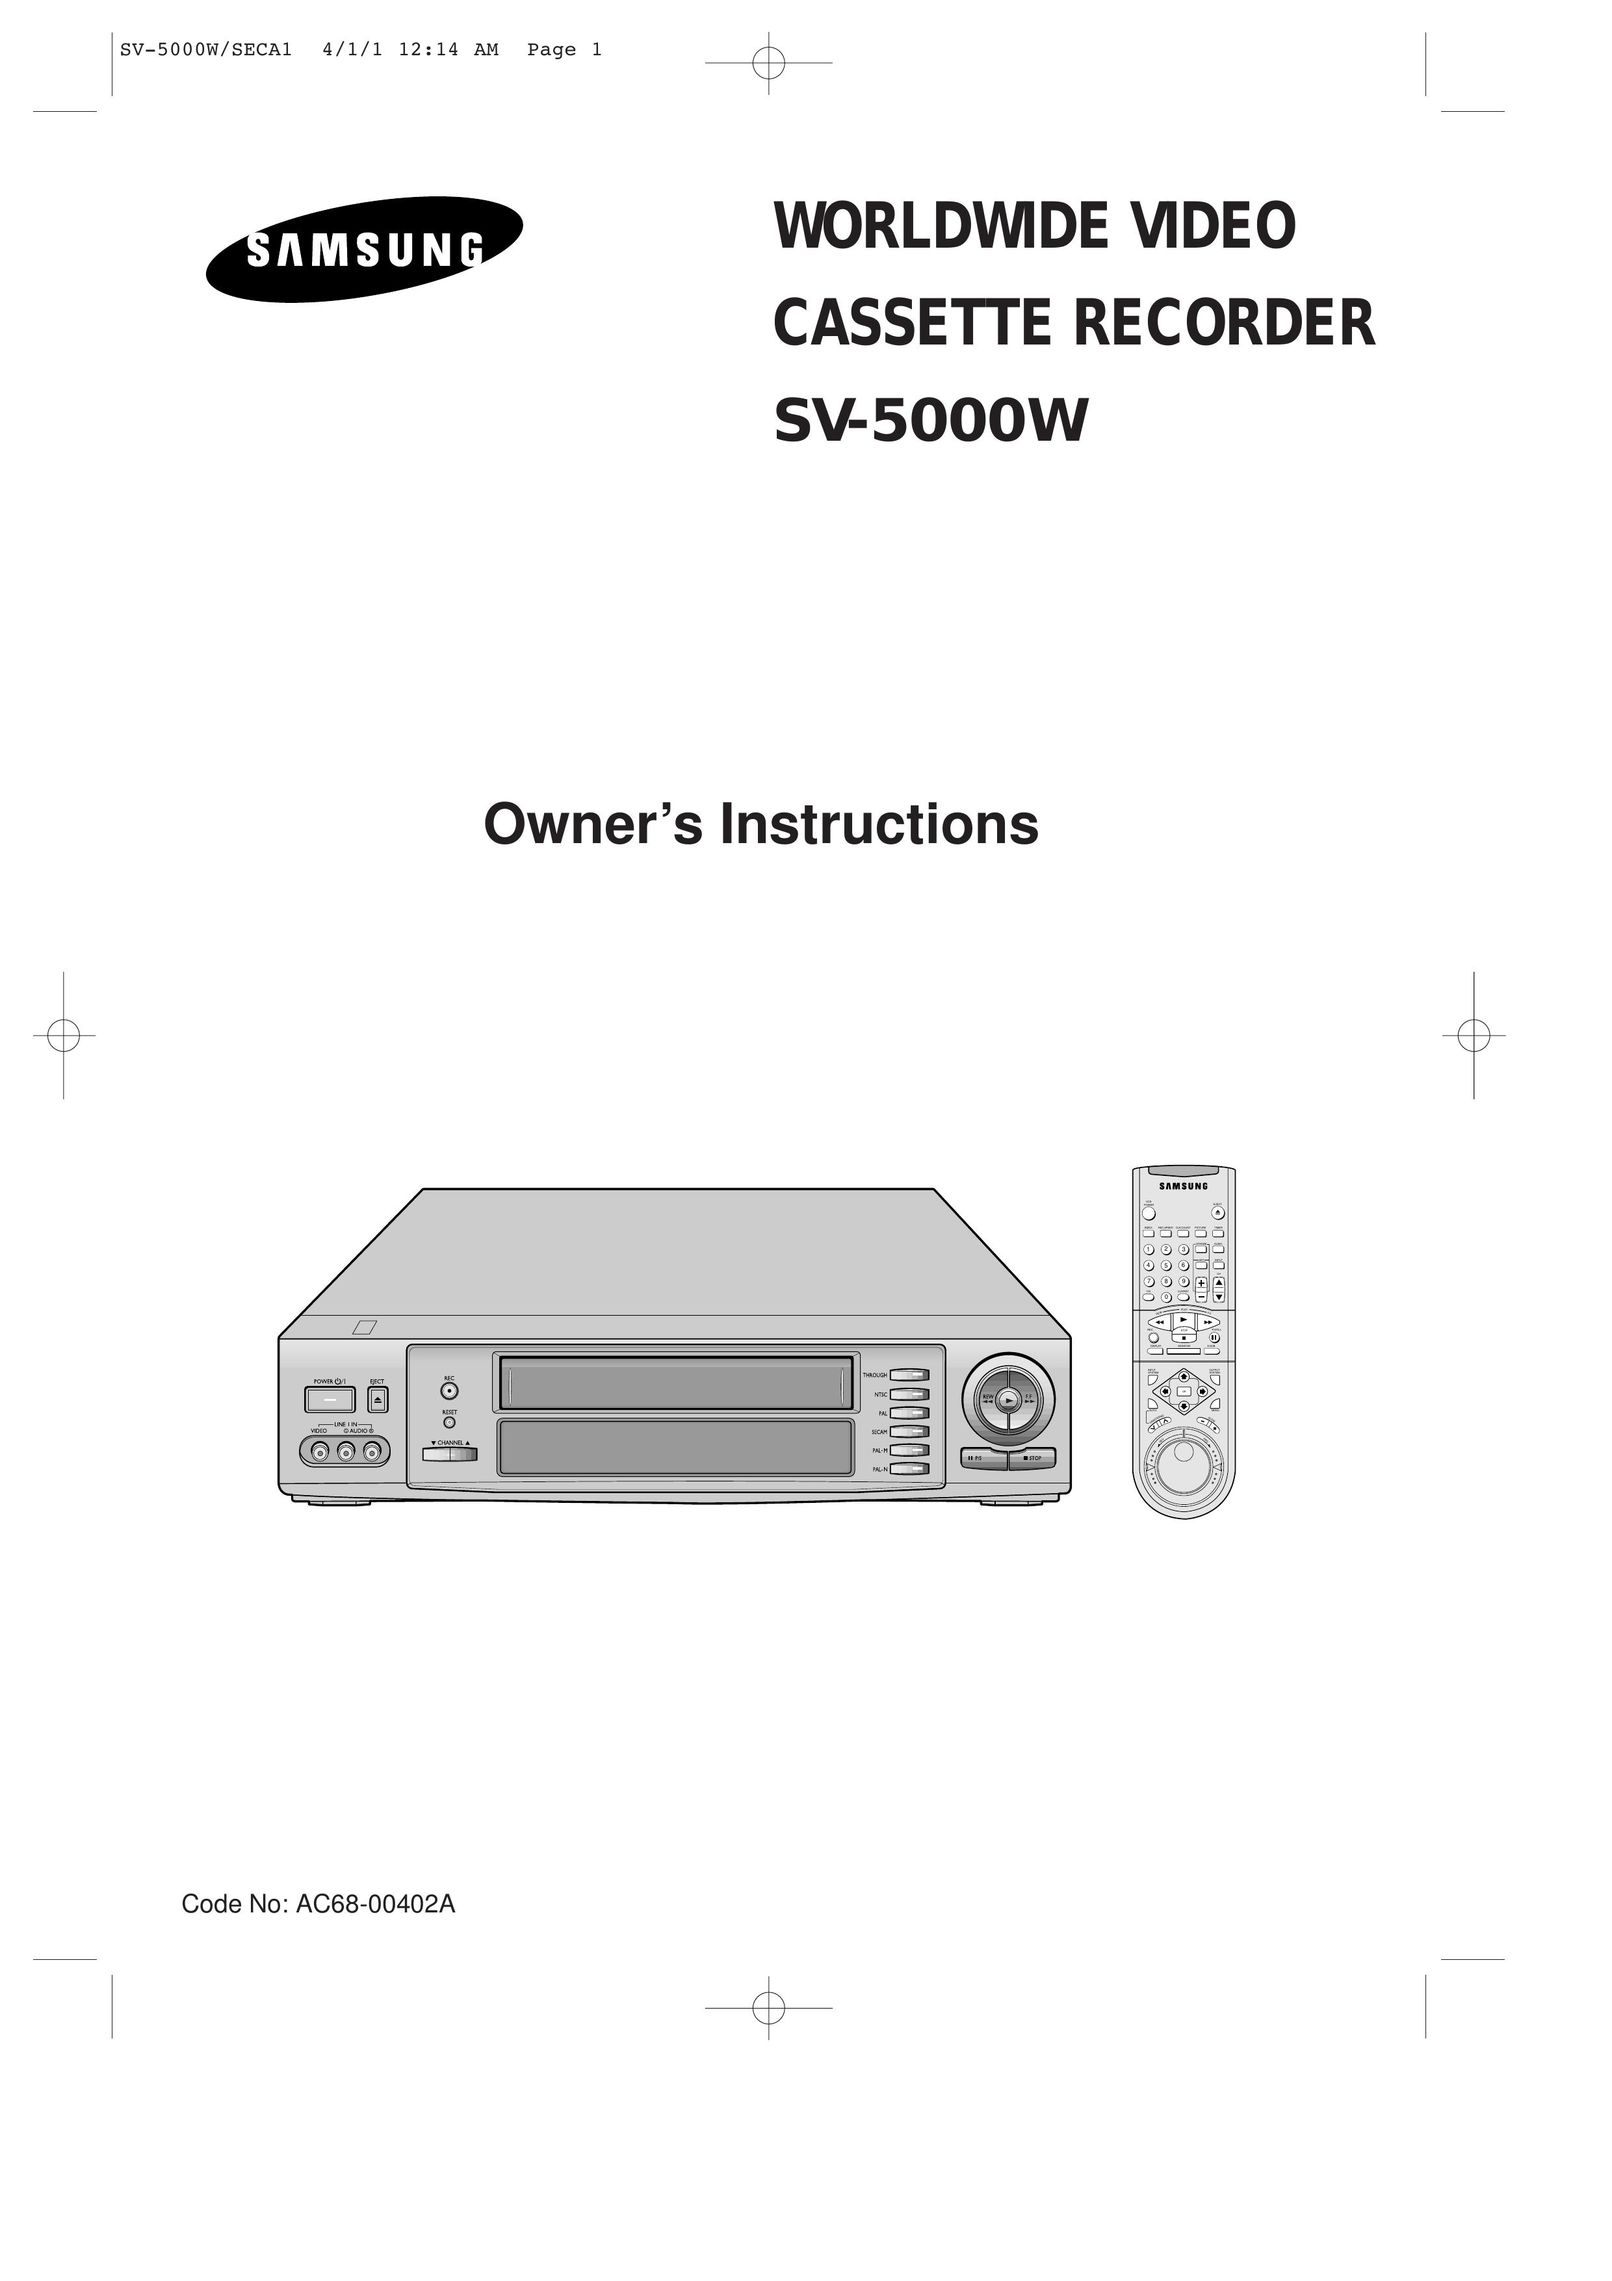 Samsung SV-5000W VCR User Manual